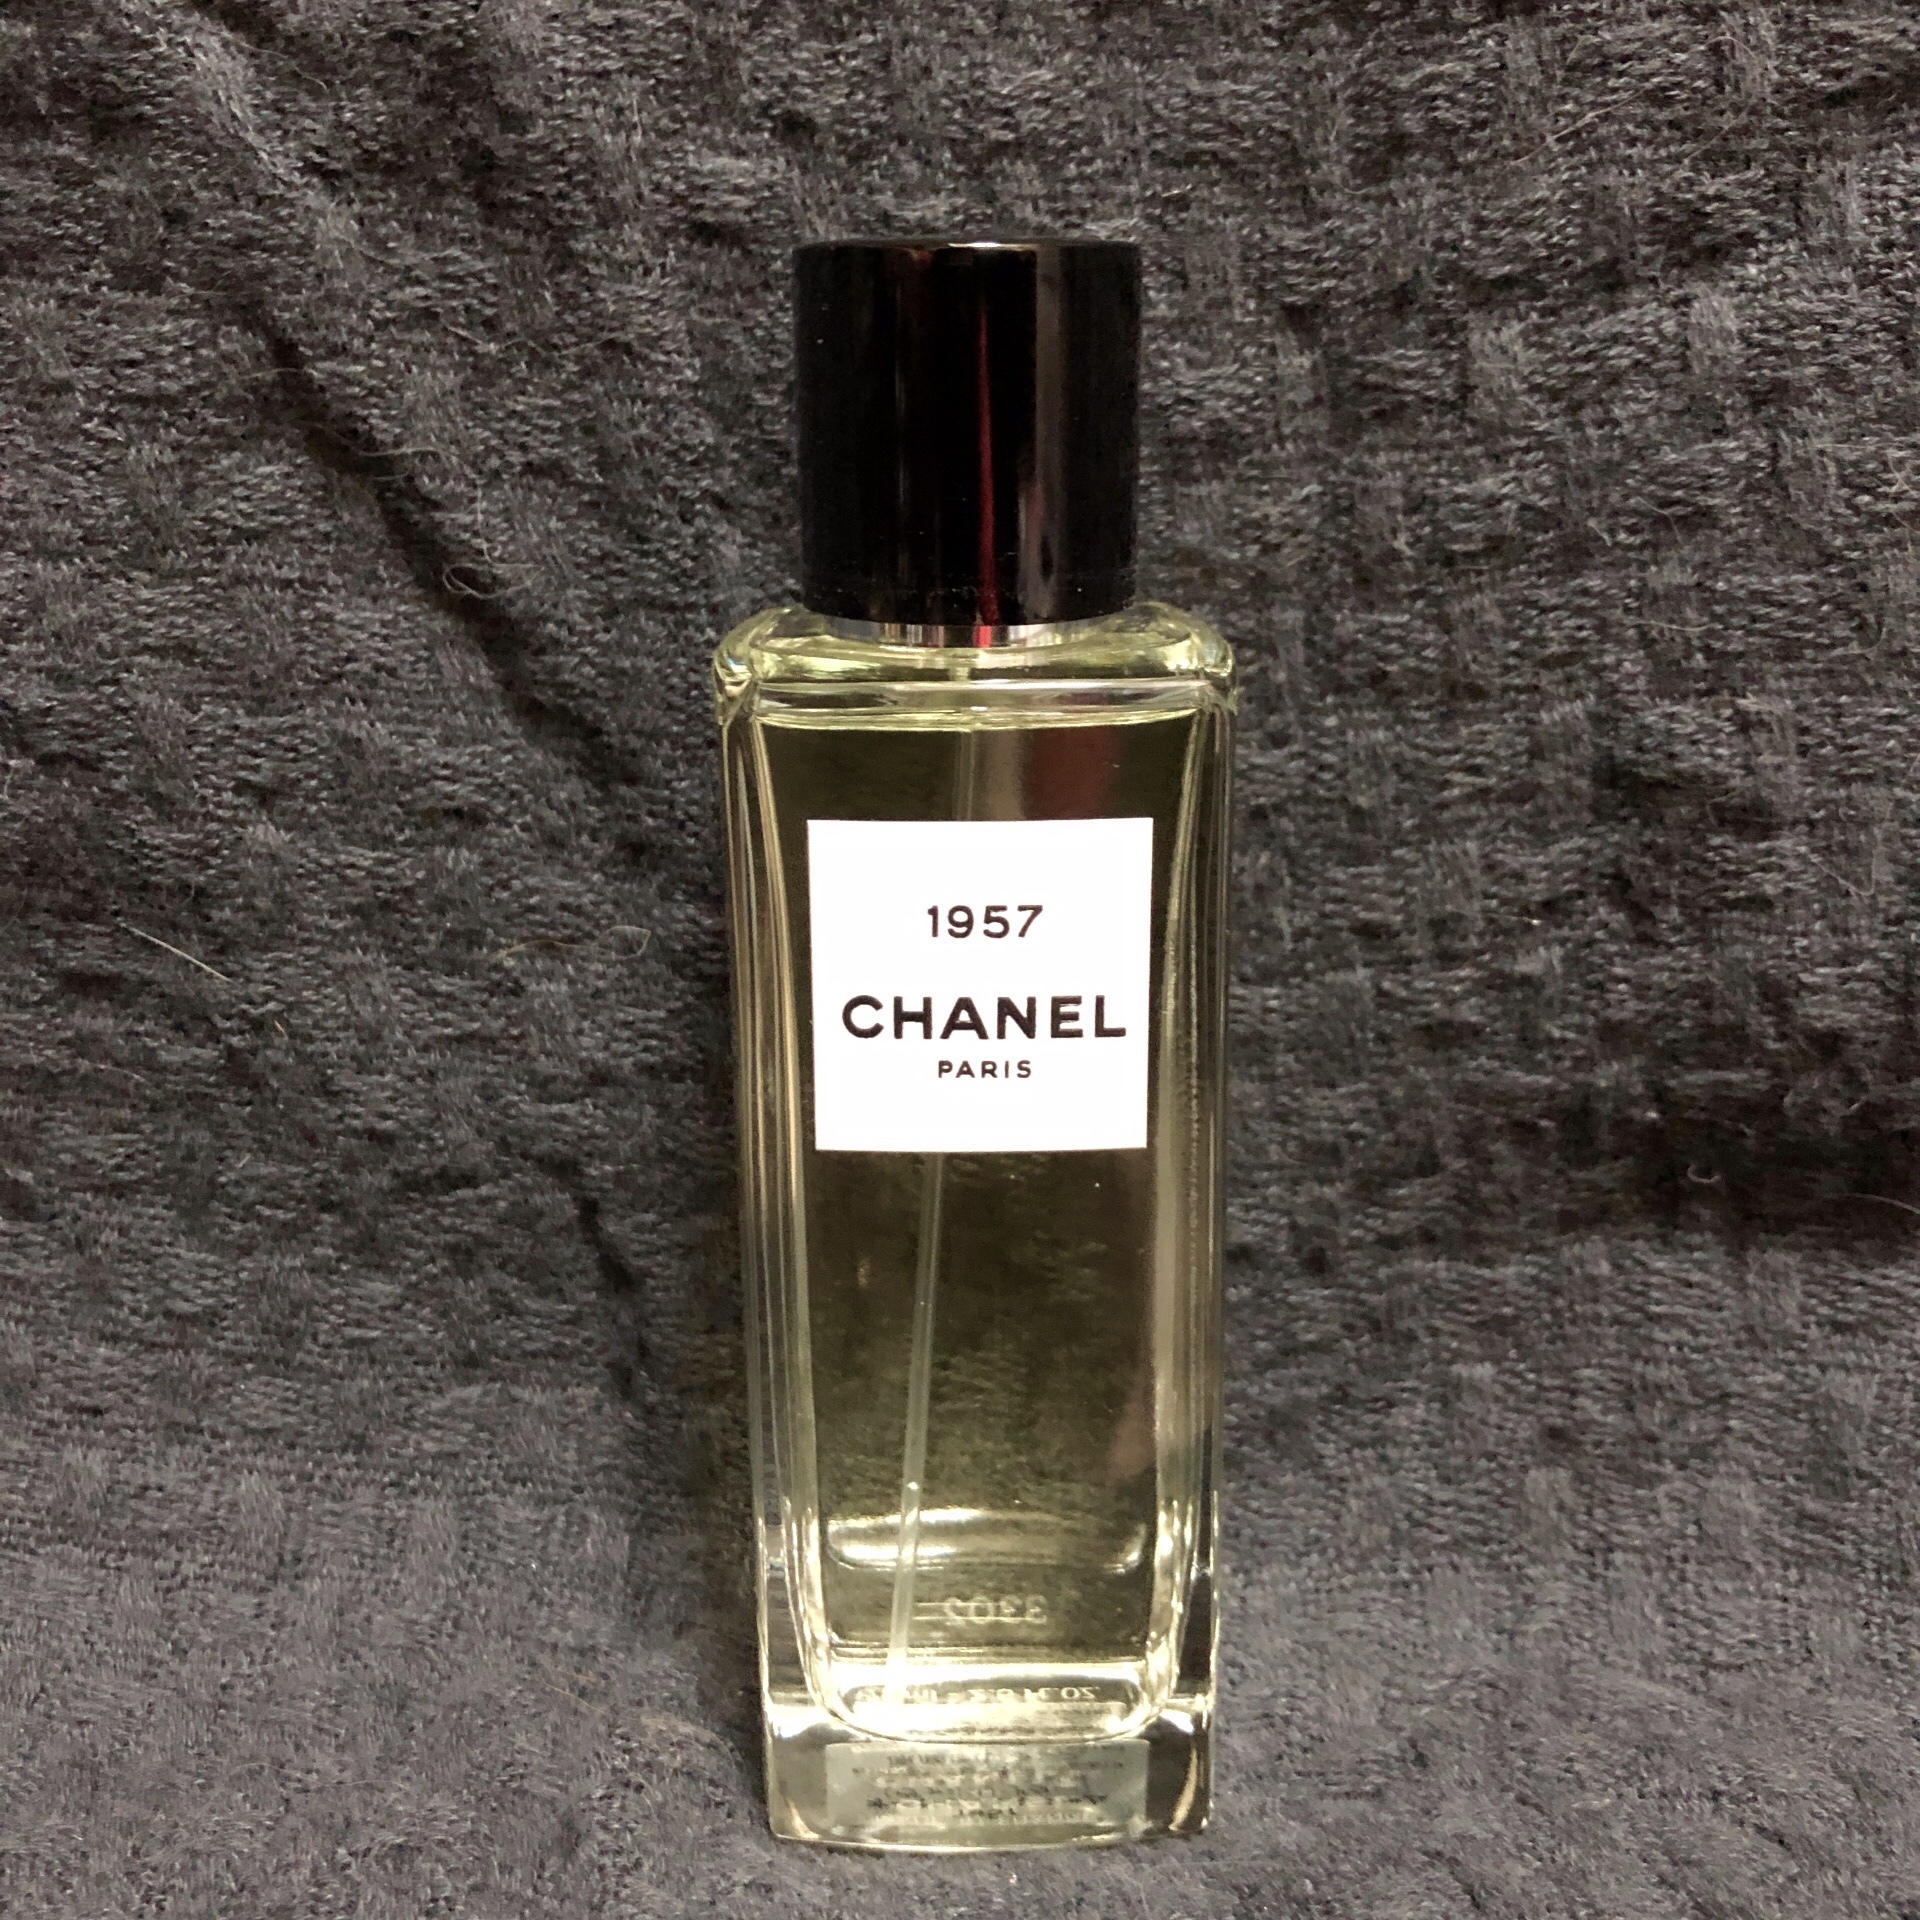 WEB限定セール 【CHANEL】1957オードゥパルファム(ヴァポリザター)75ml 香水(女性用)